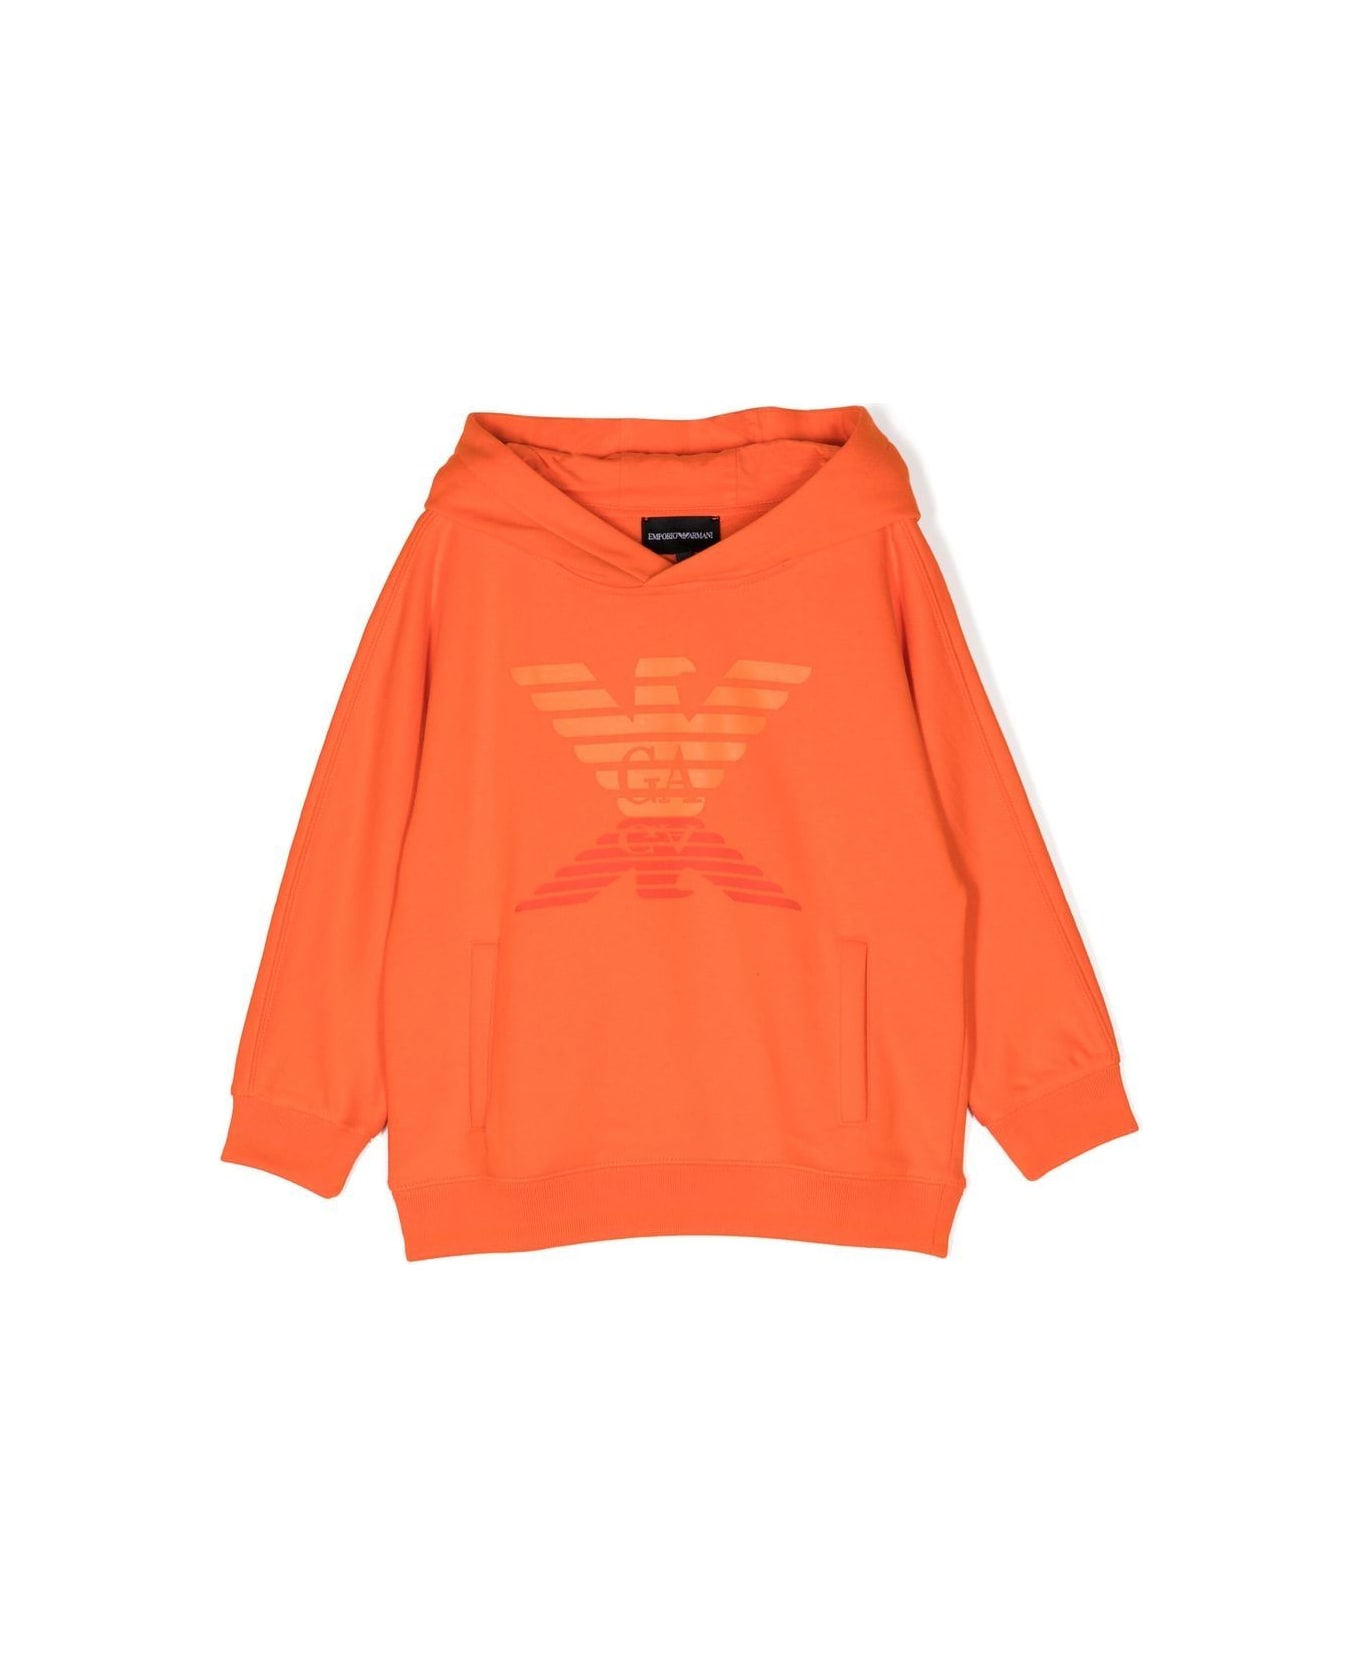 Emporio Armani Sweatshirt With Logo - Orange